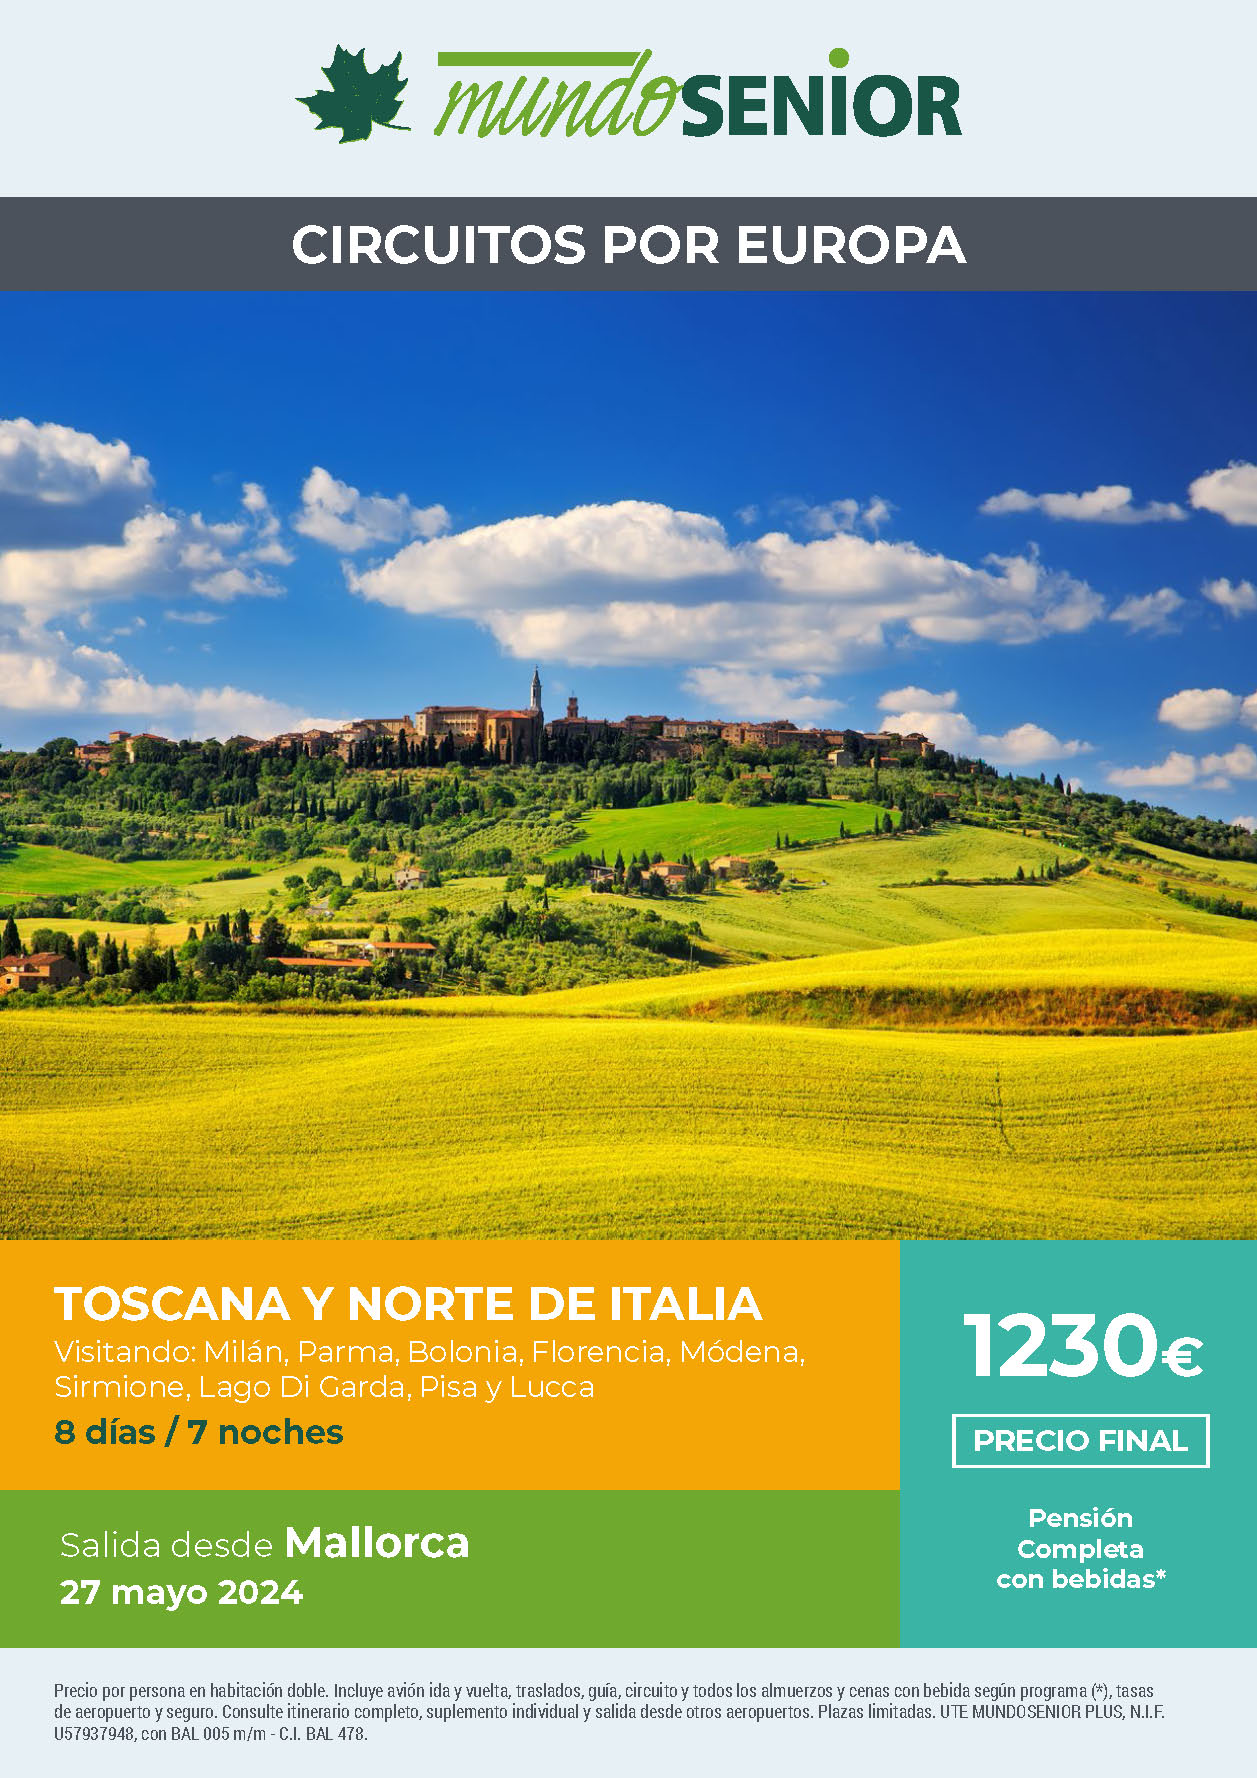 Oferta Mundo Senior circuito Toscana y Norte de Italia 8 dias pension completa salida 27 mayo 2024 en vuelo directo desde Mallorca